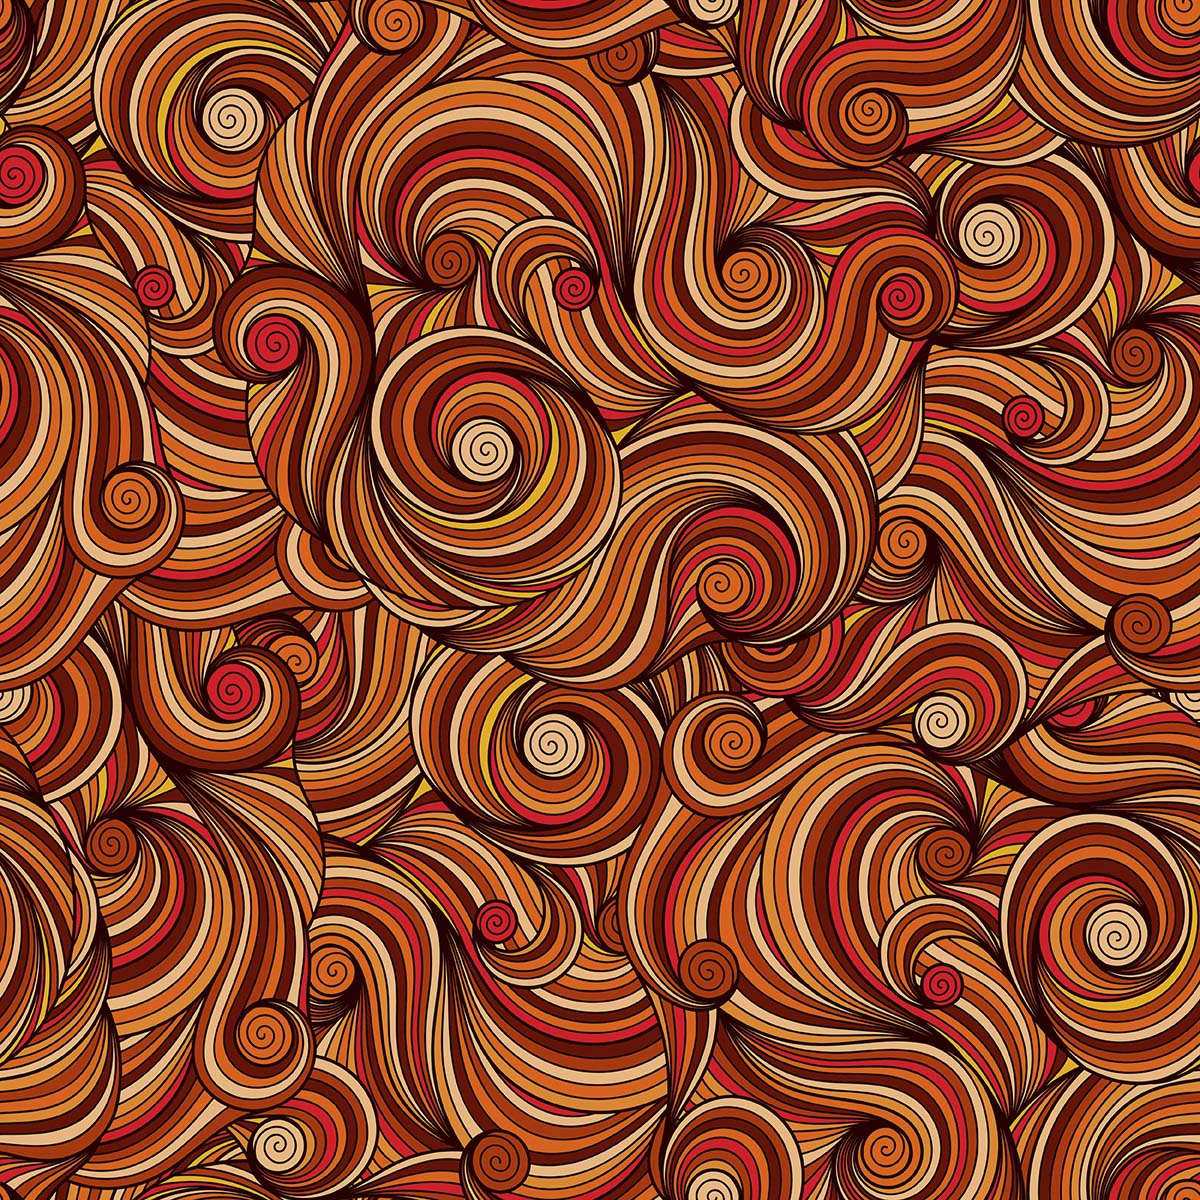 A pattern of swirls and curls